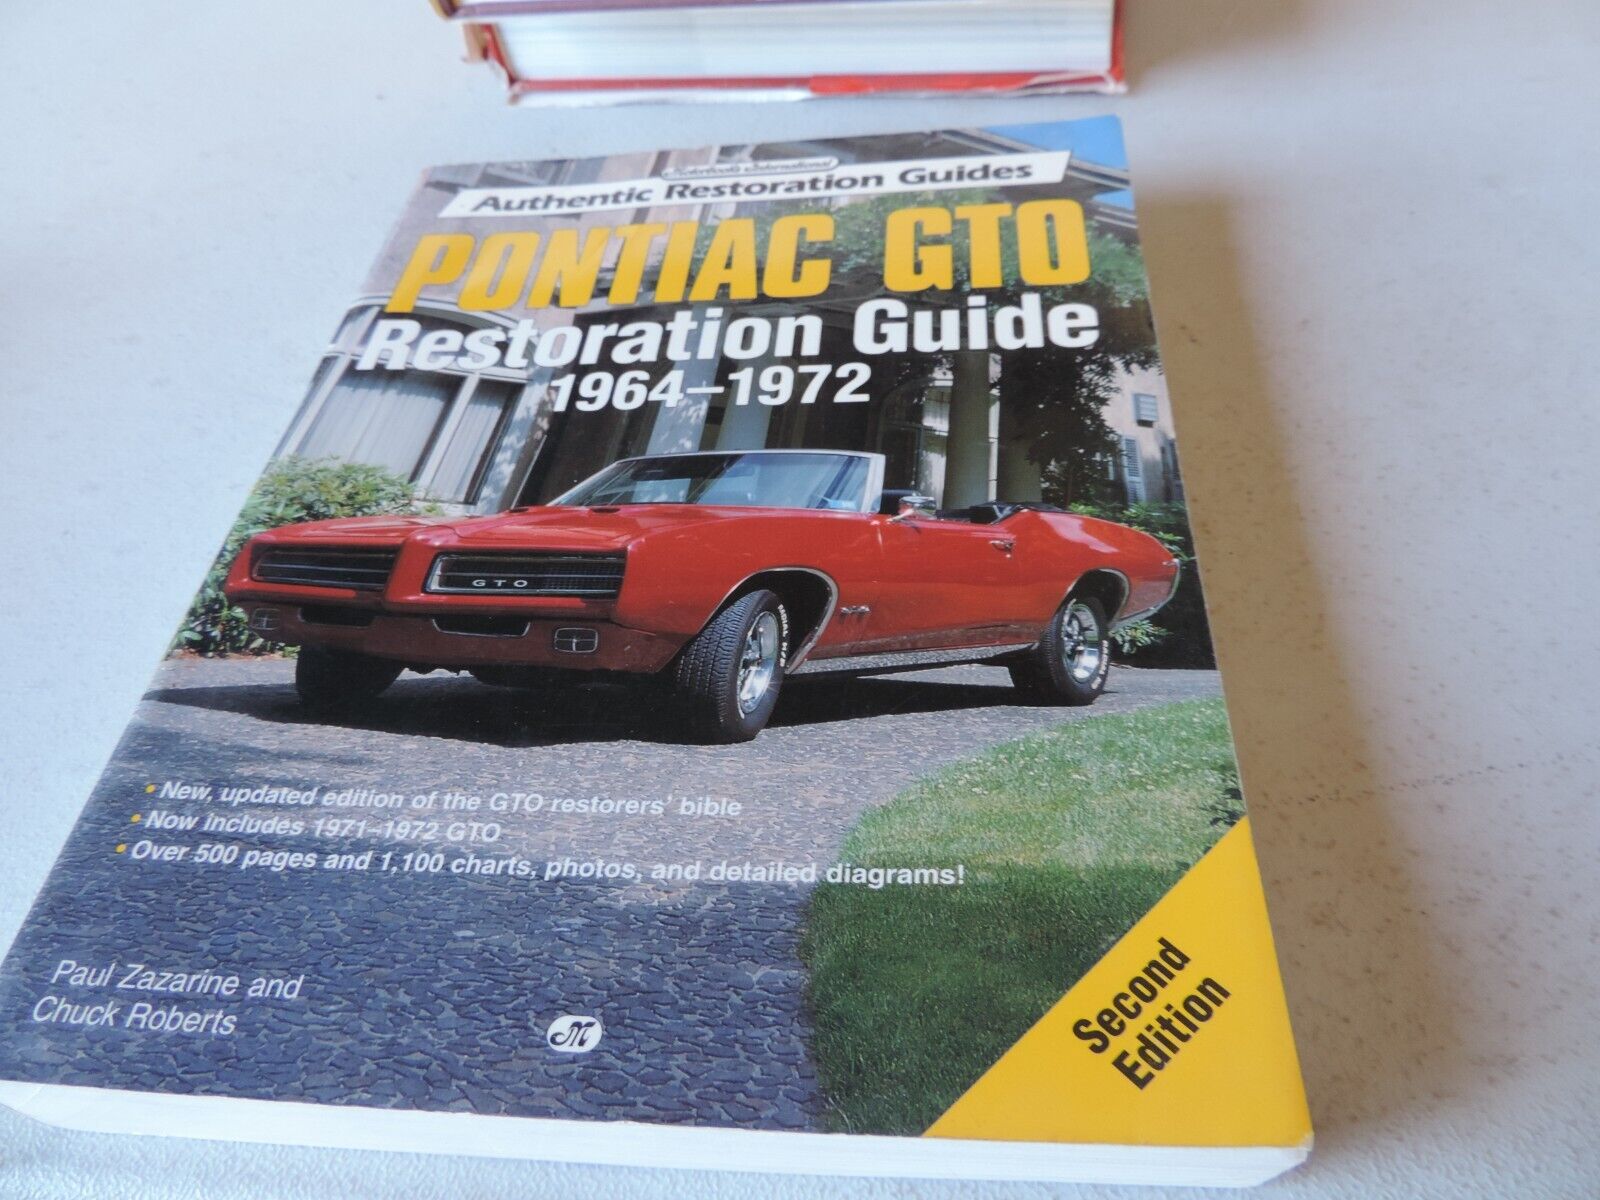 Authentic Restoration Guide Pontiac GTO Restoration Guide 1964-1972